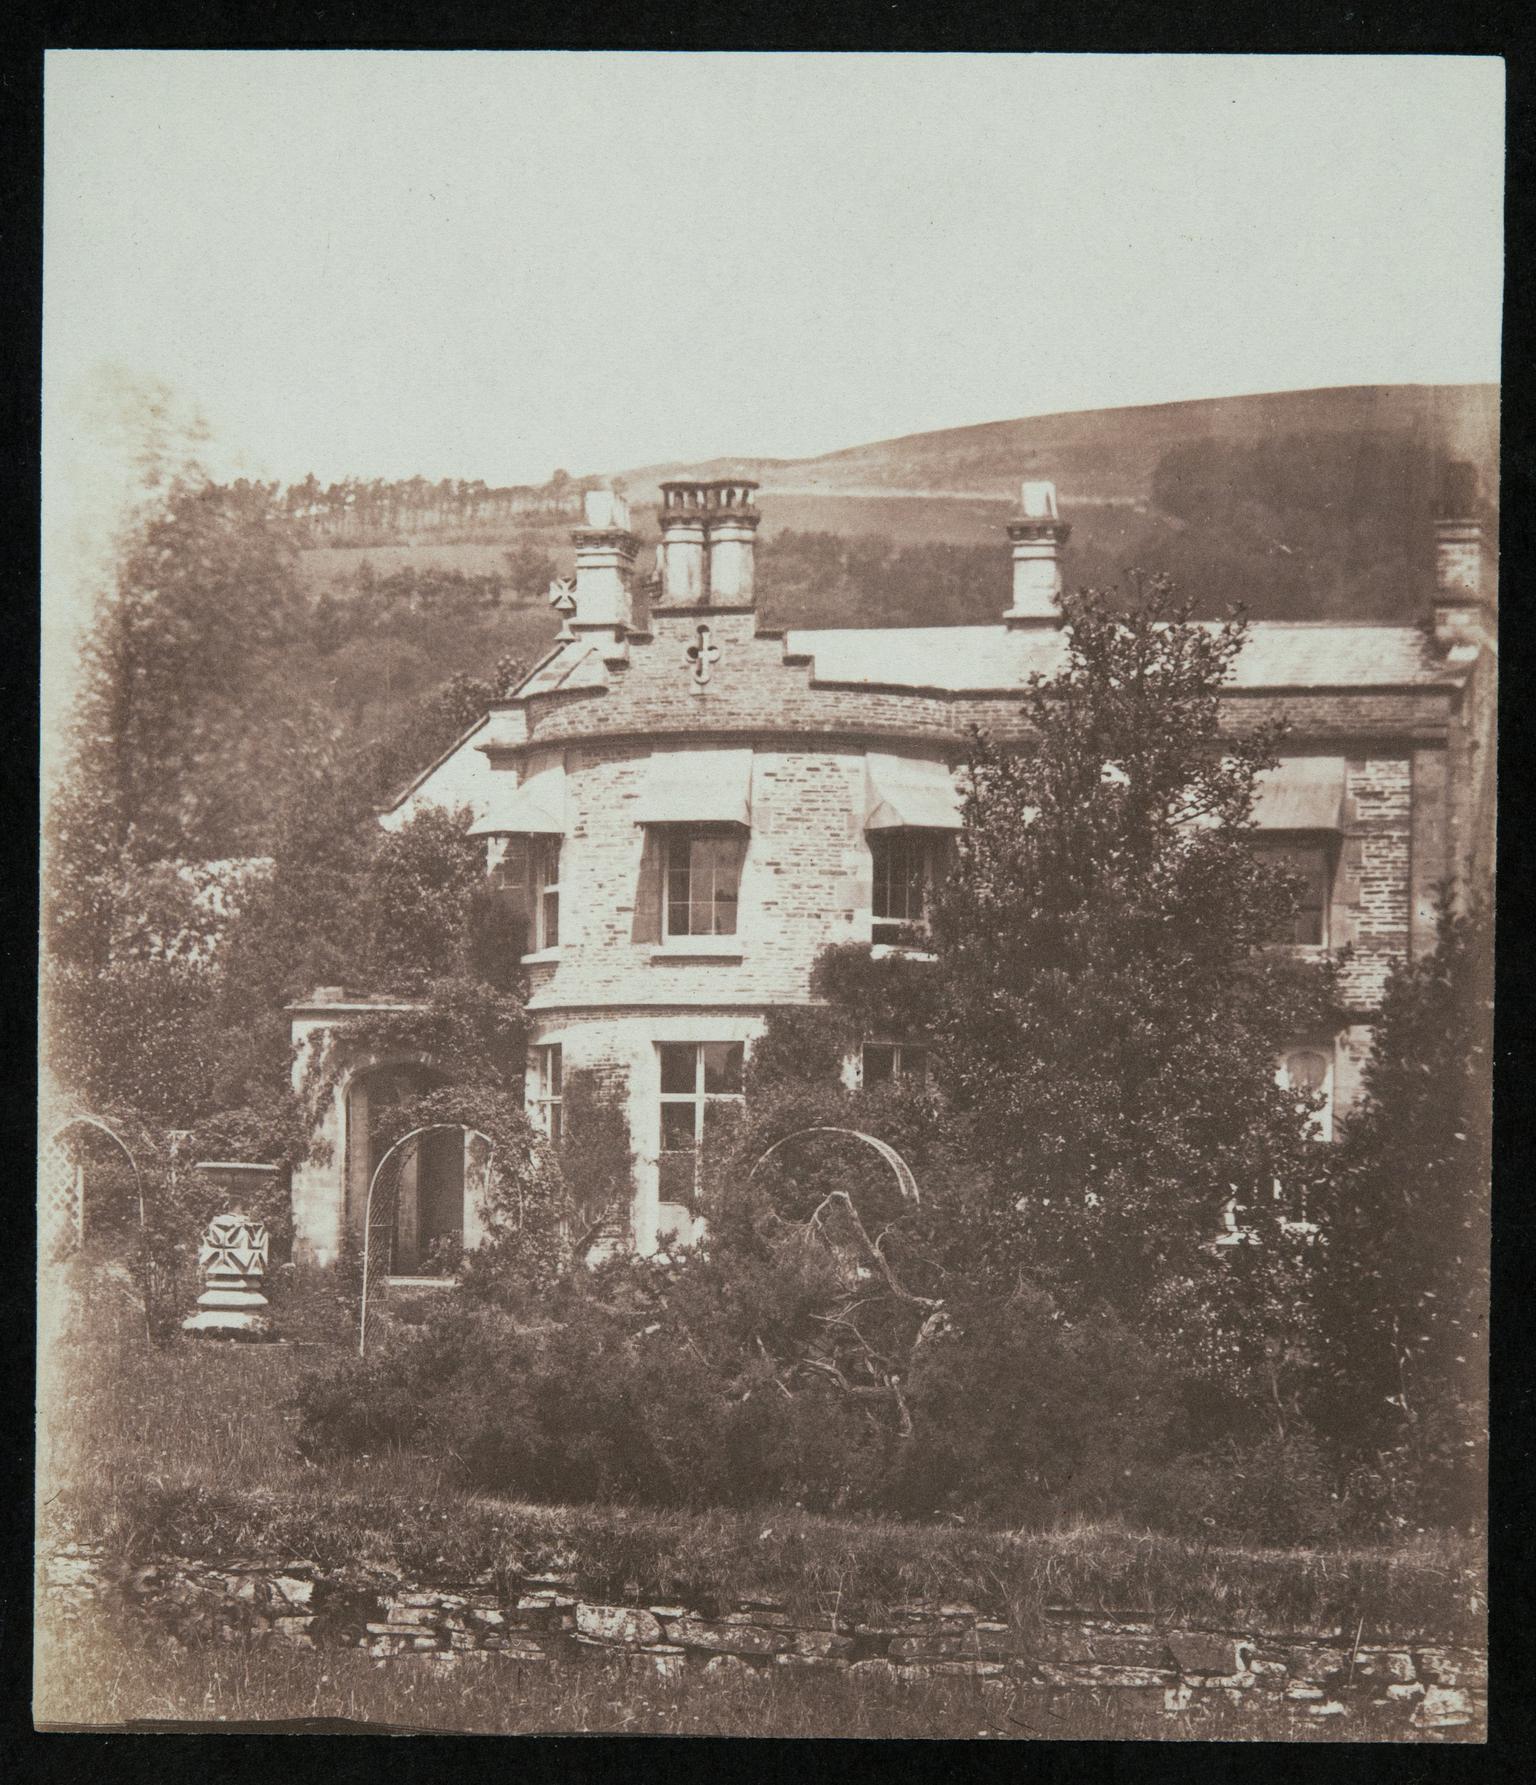 Lanelay, near Llantrisant, photograph